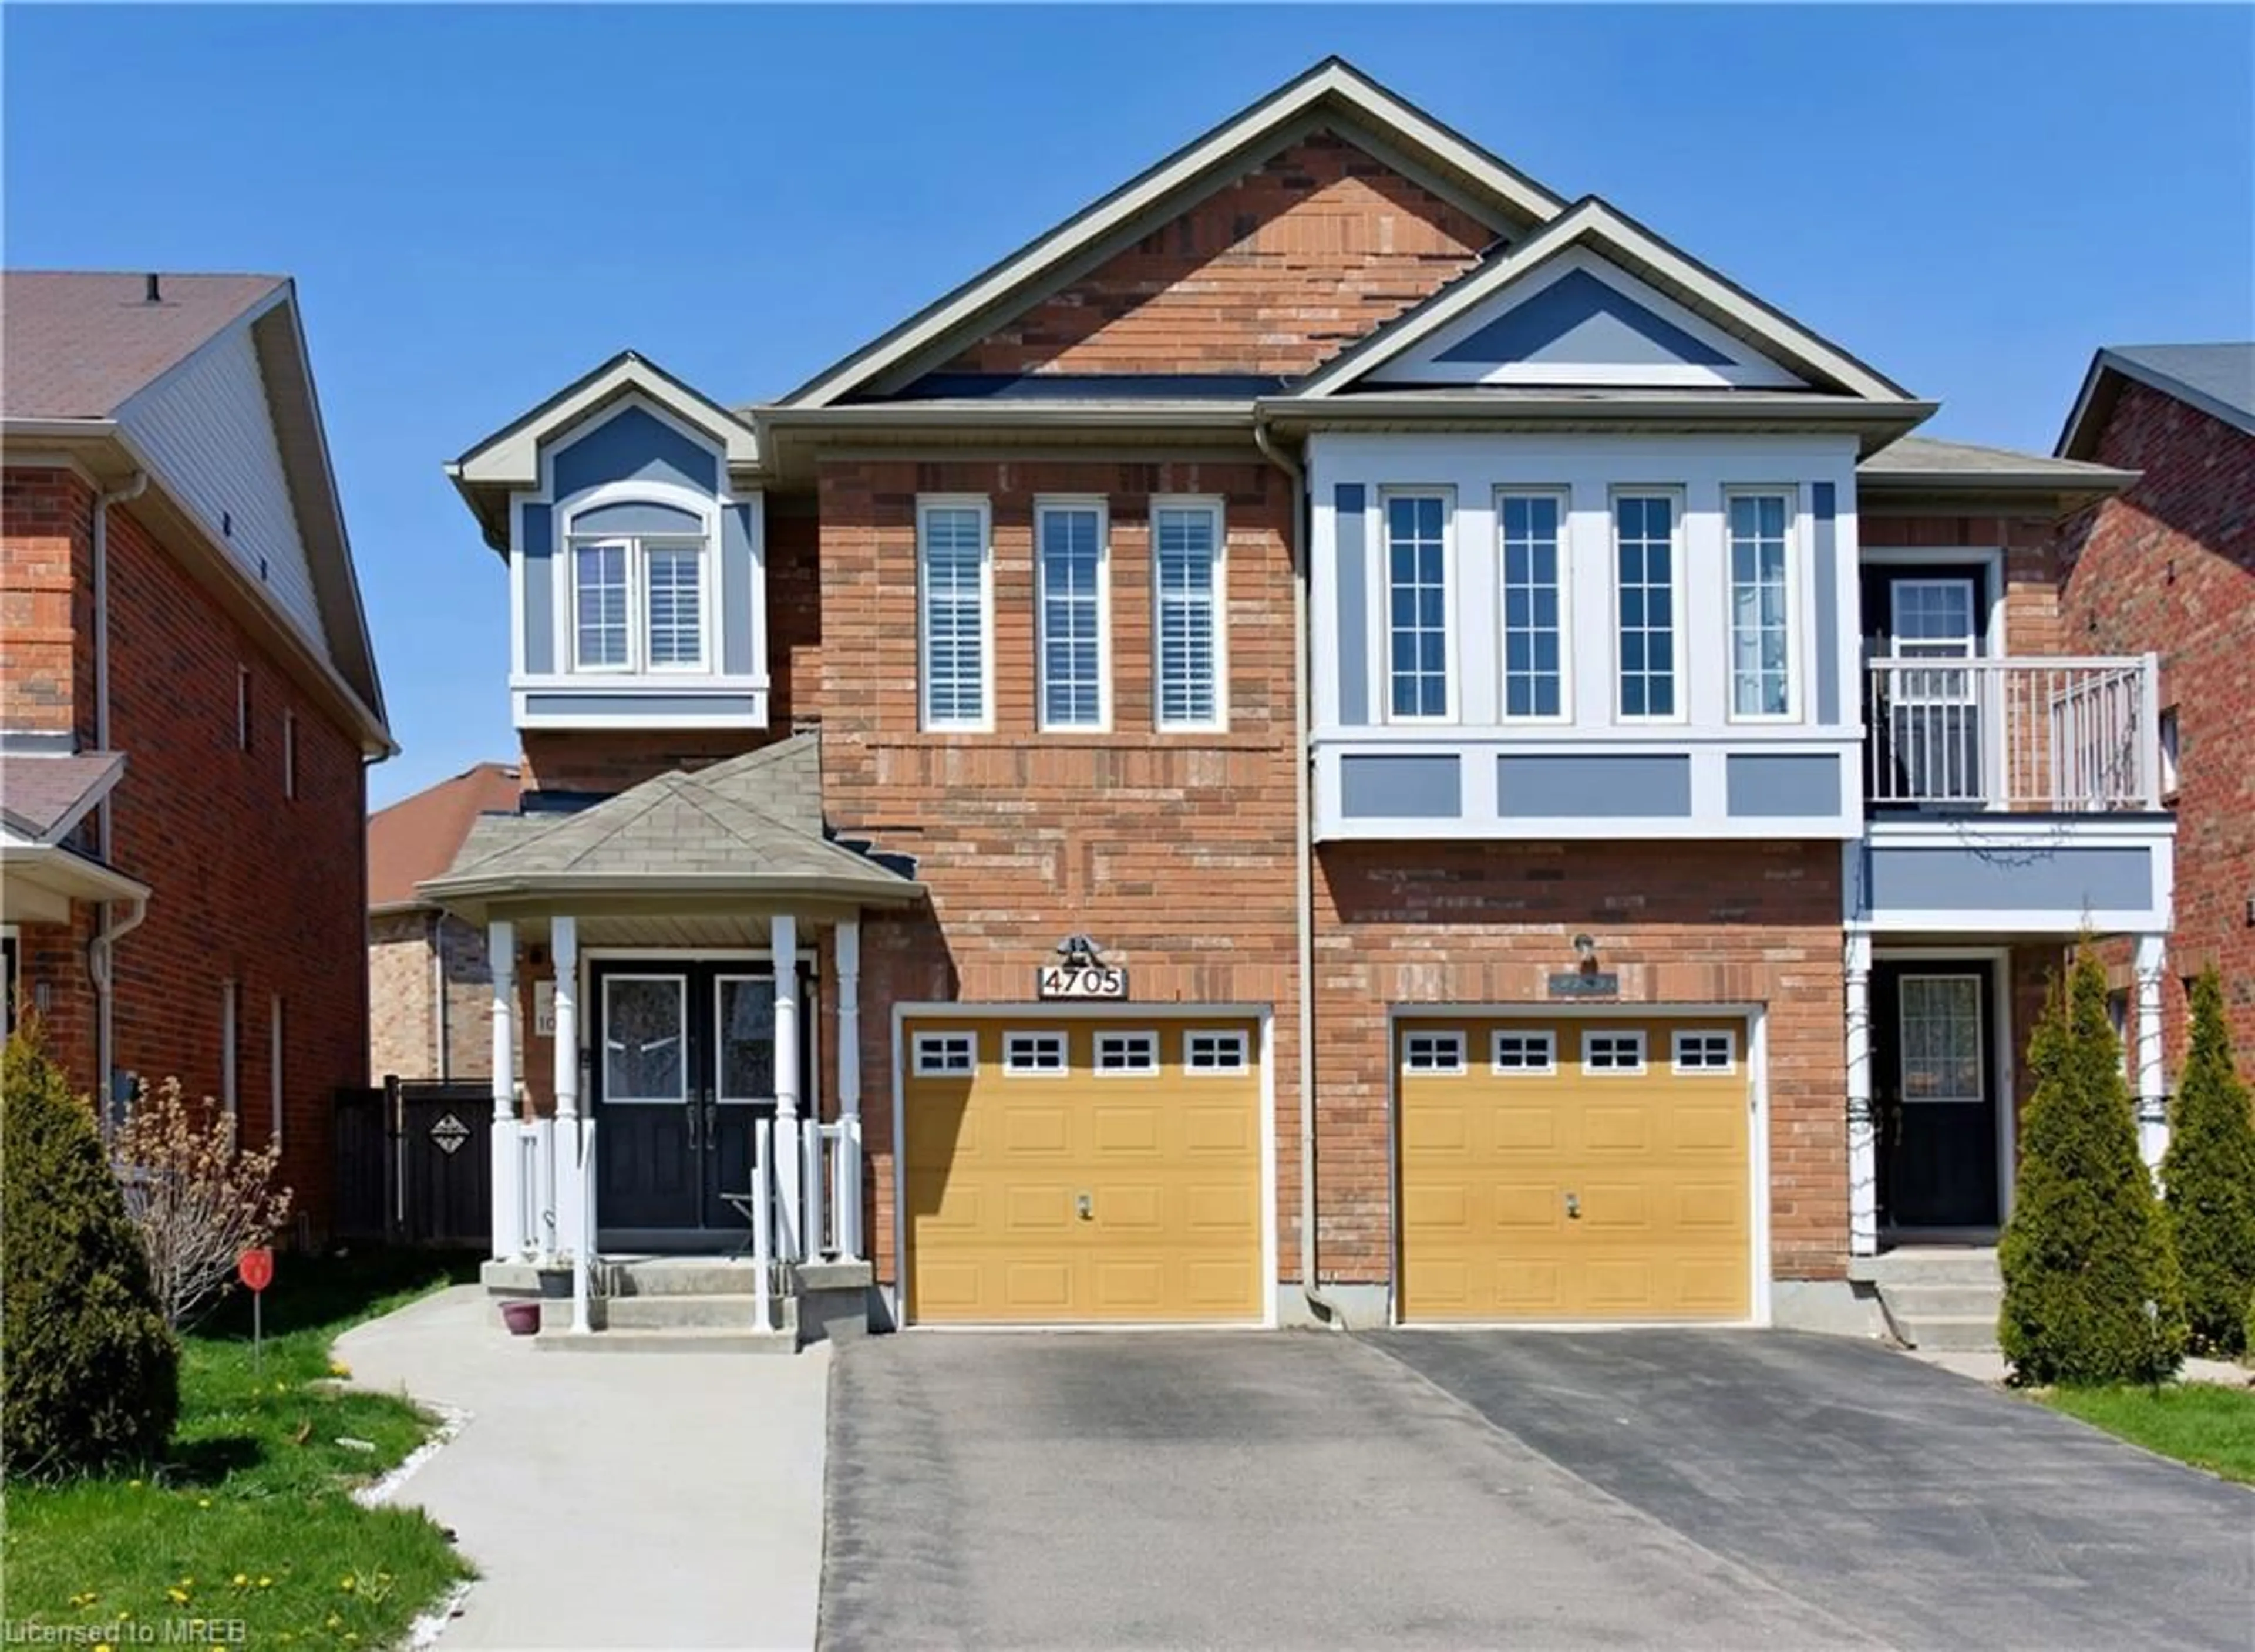 Home with brick exterior material for 4705 Alana Glen Dr, Mississauga Ontario L5V 0P3